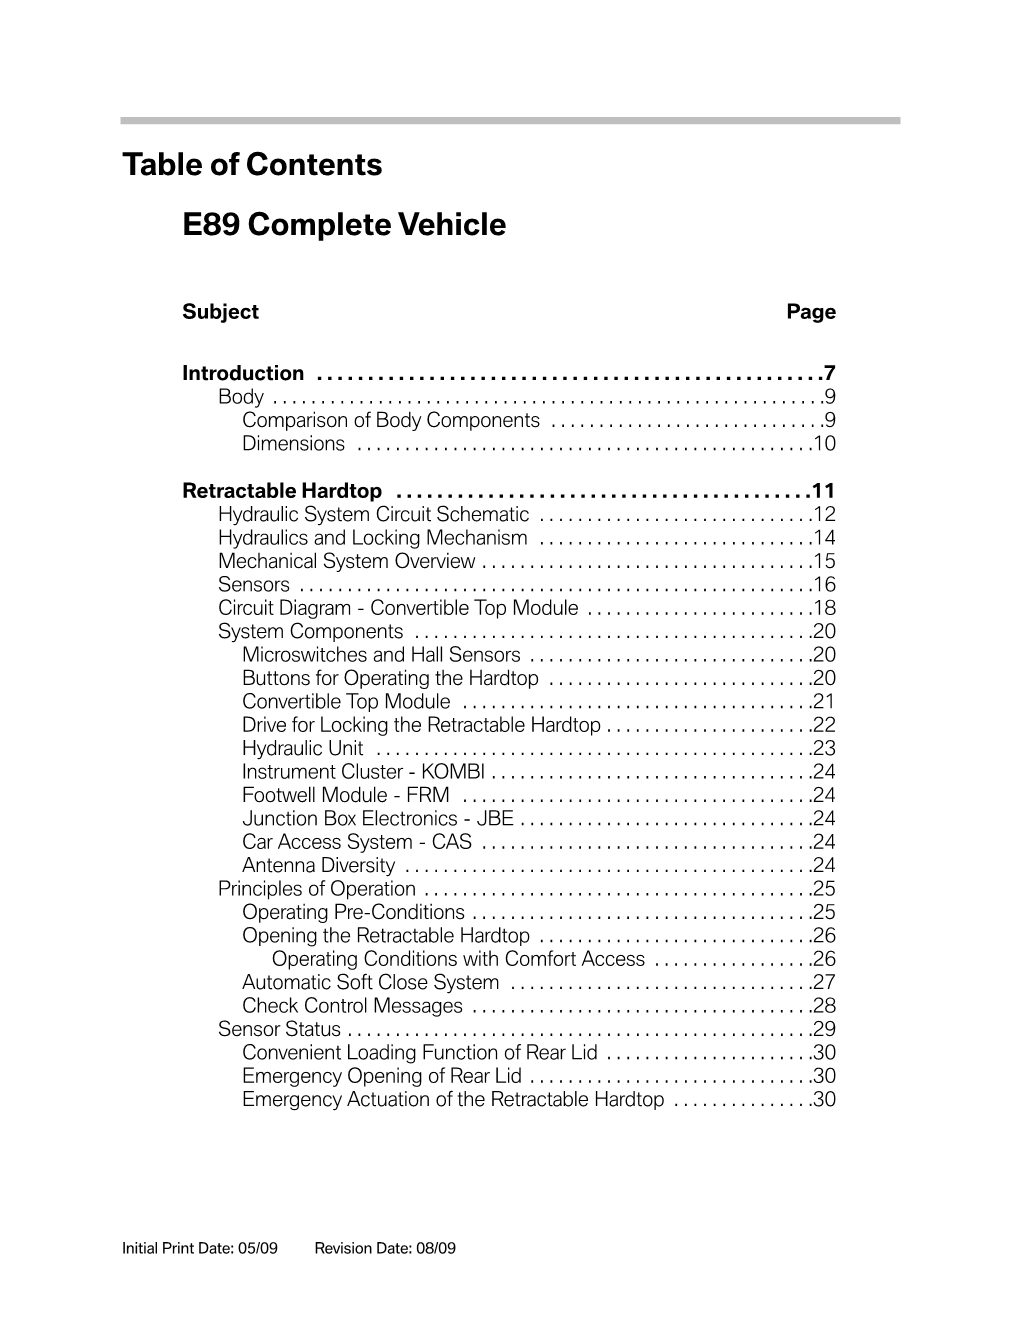 E89 Complete Vehicle